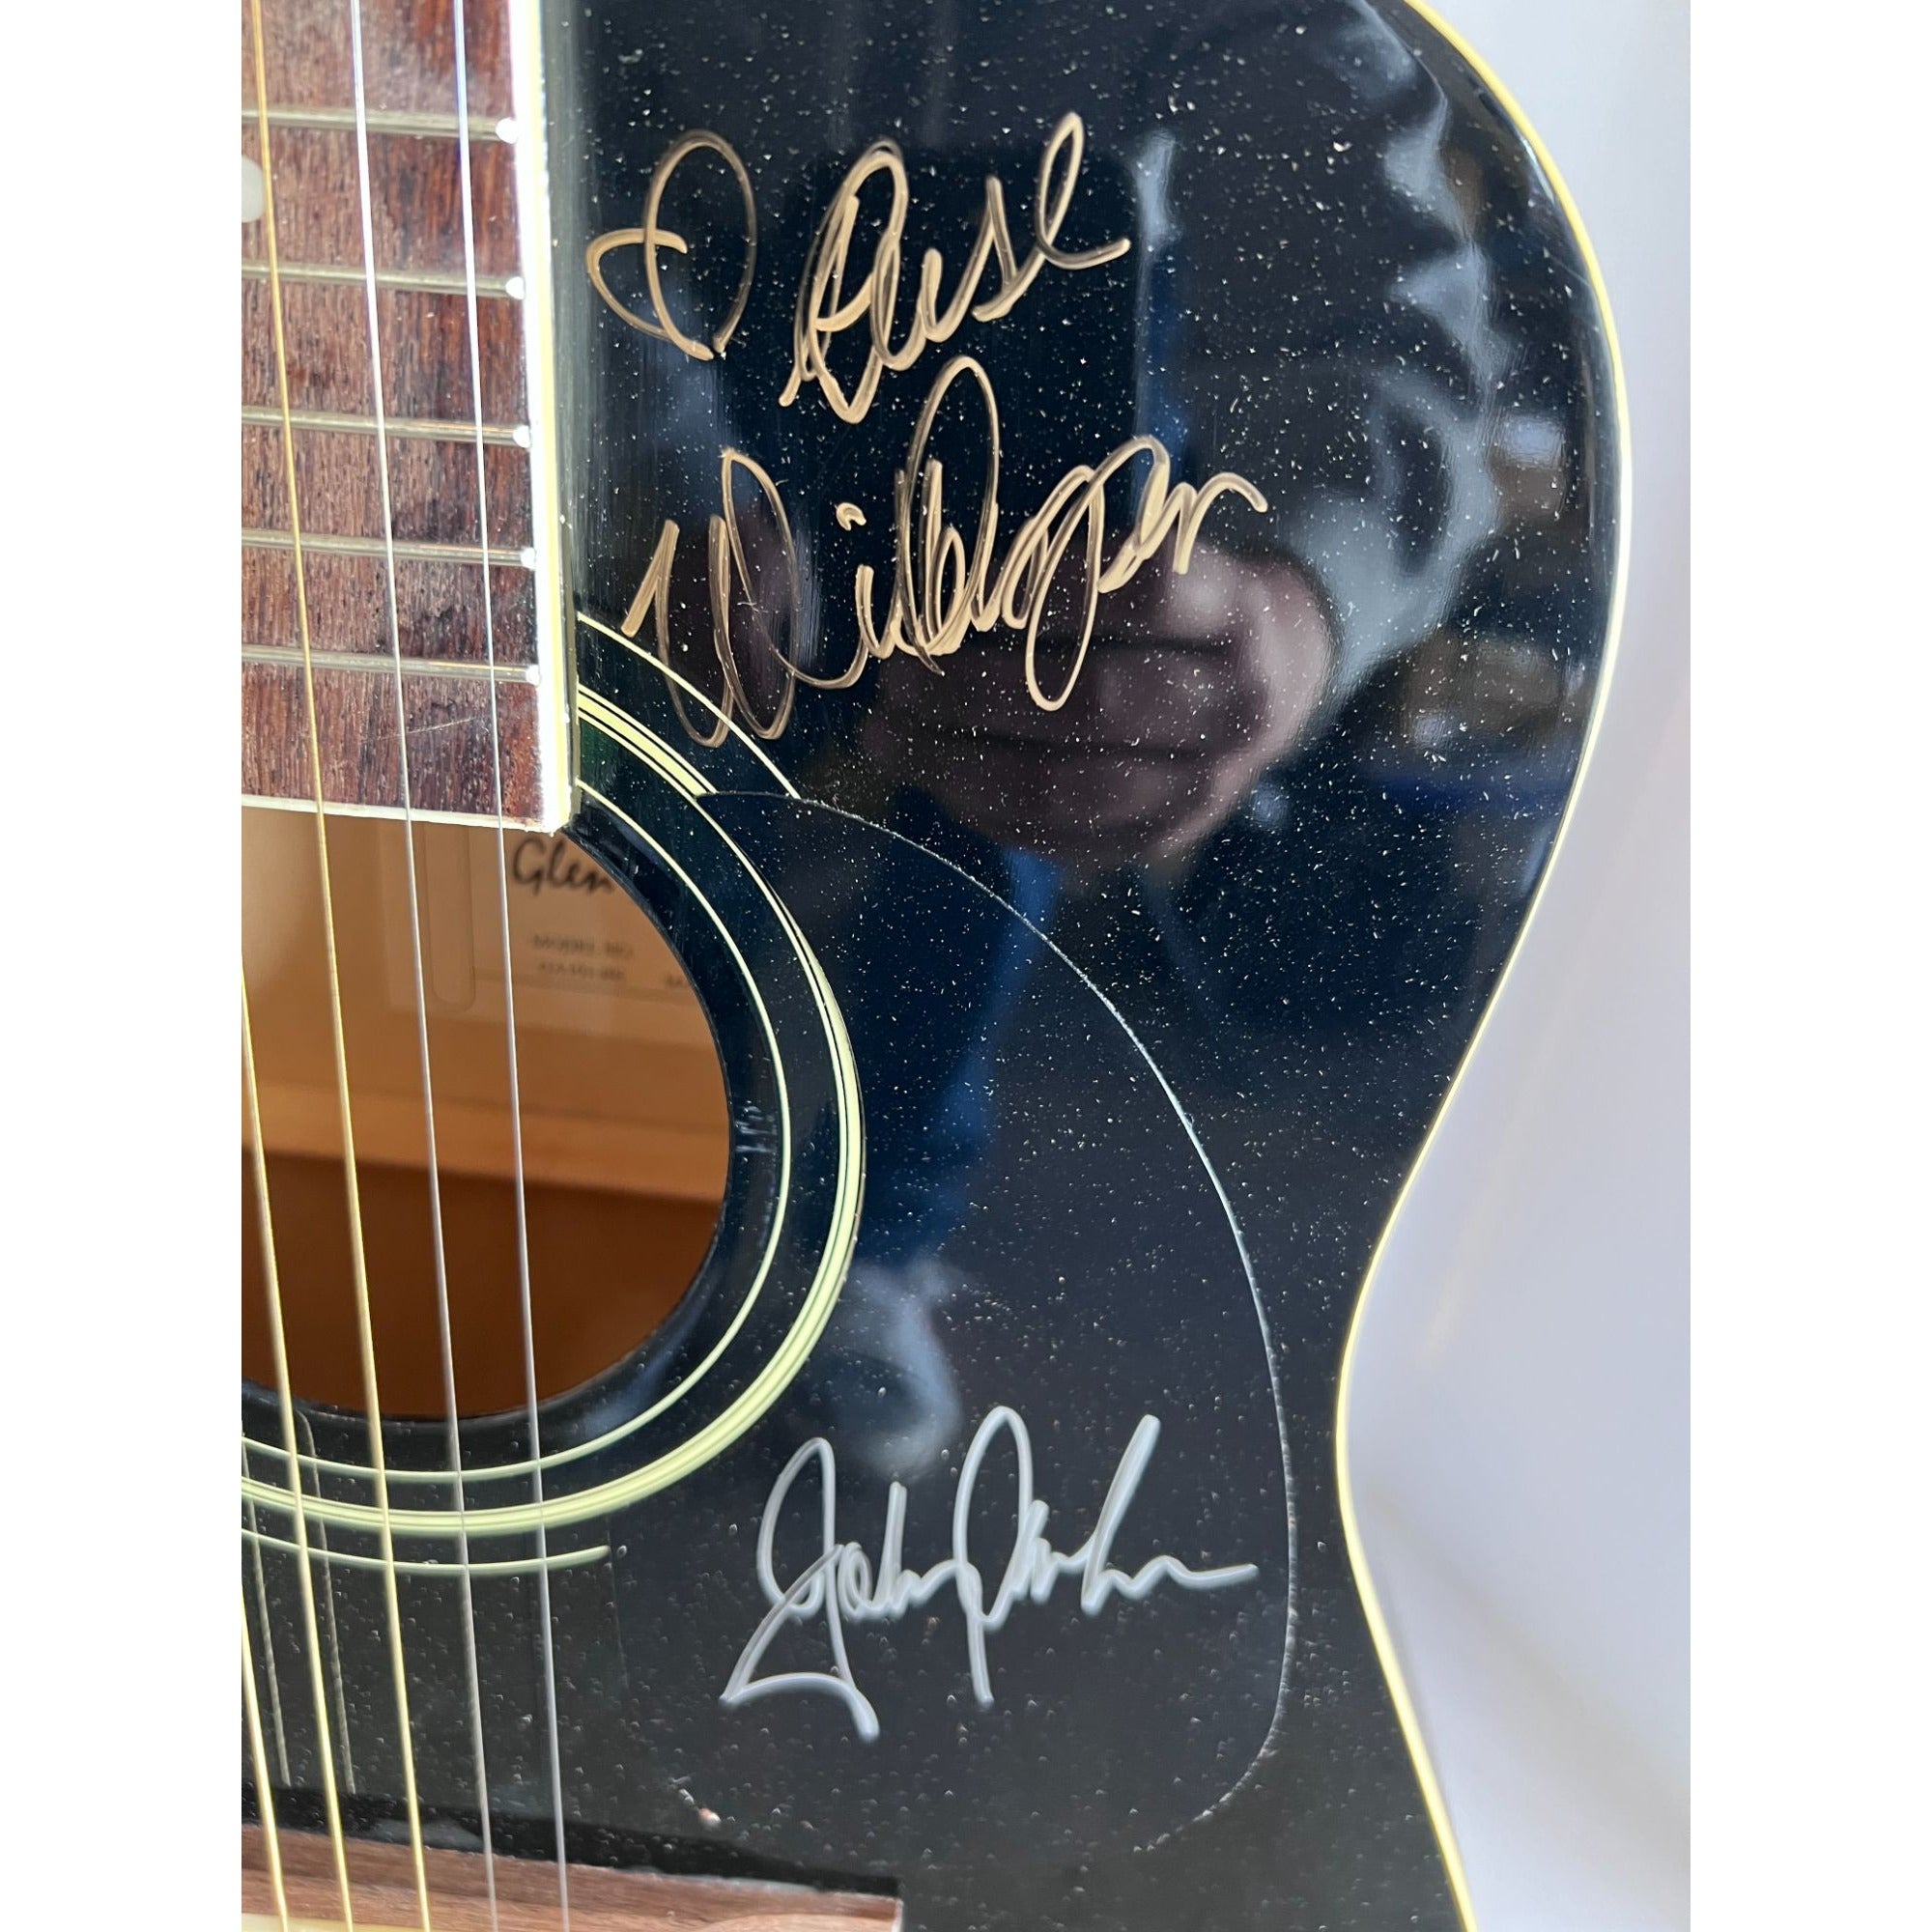 Johnny Cash Juaquin Phoenix "Walk The Line" cast signed full size black acoustic guitar with proof